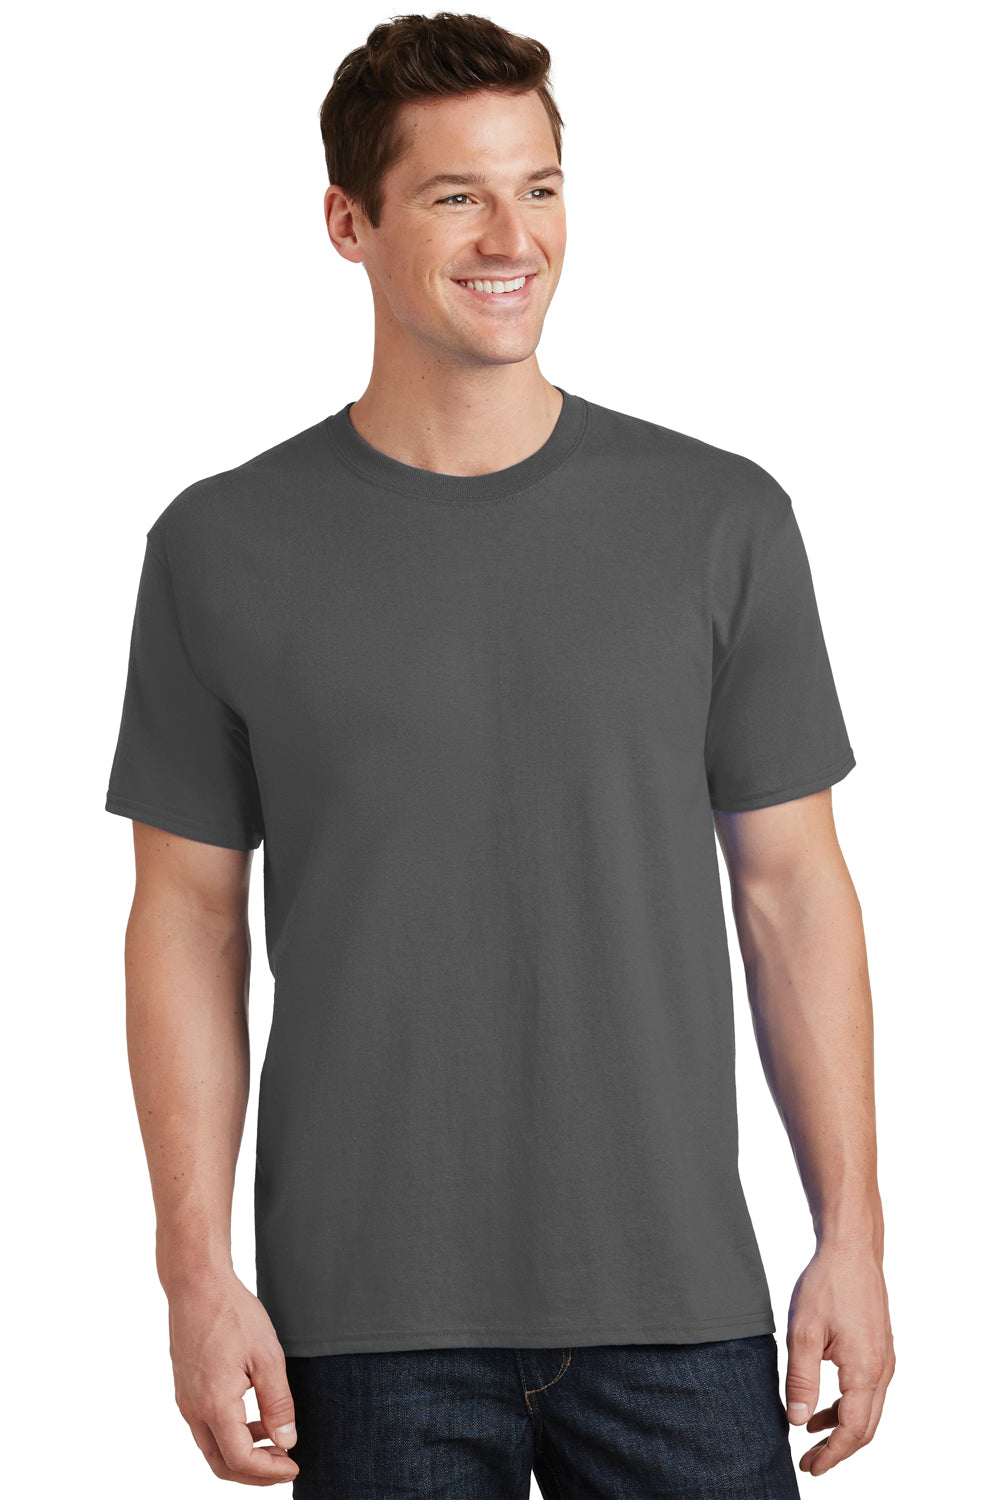 Port & Company PC54 Mens Core Short Sleeve Crewneck T-Shirt Charcoal Grey Front